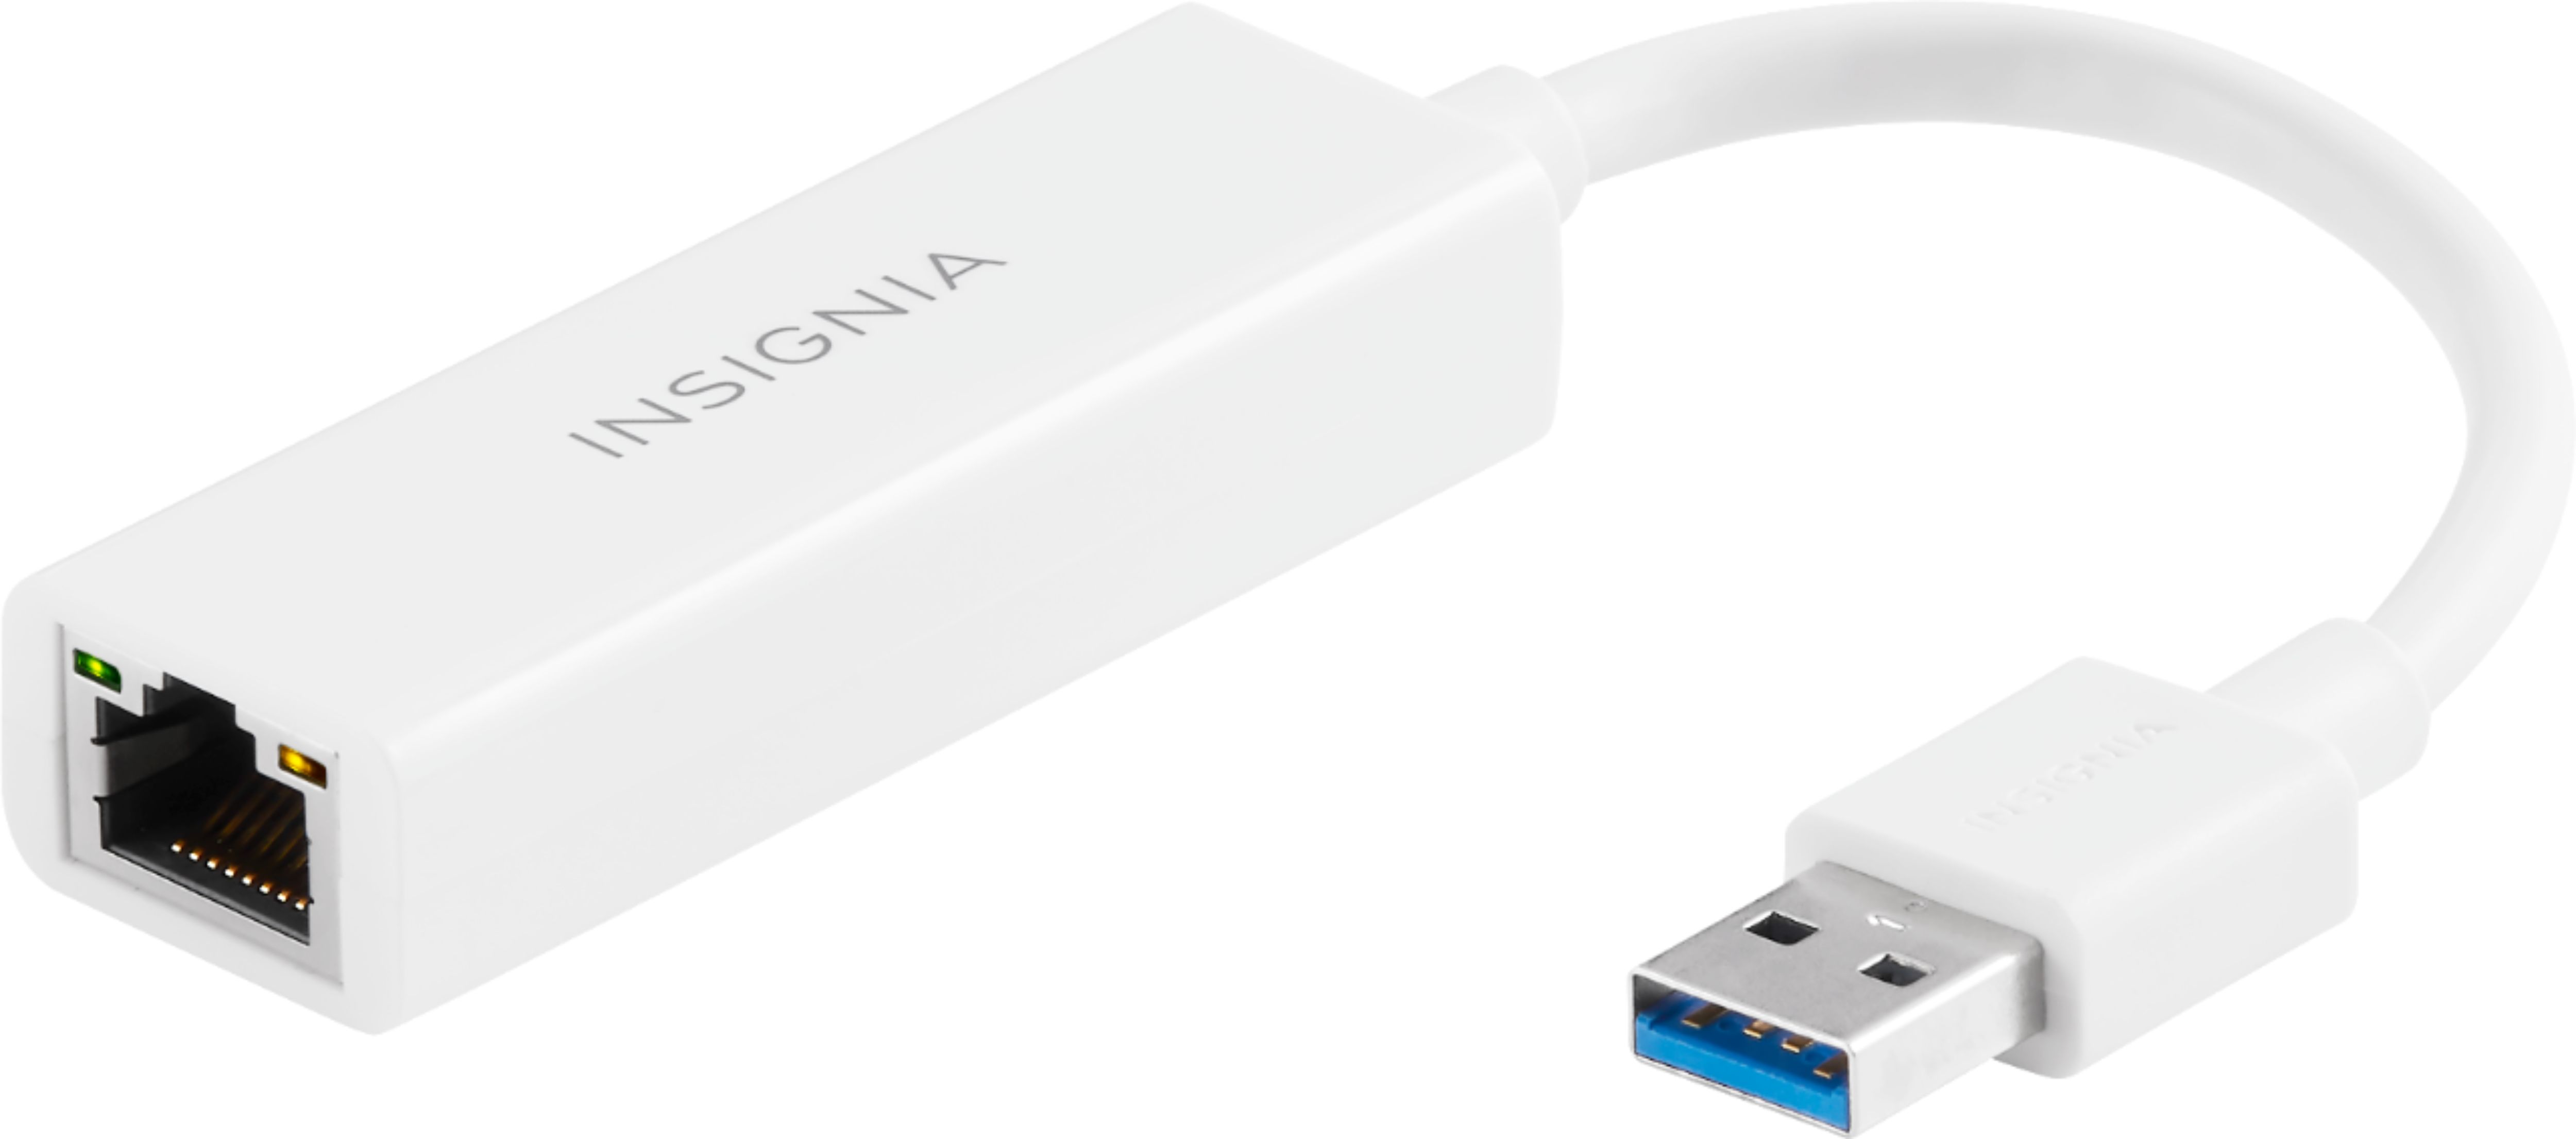 New Samsung GENUINE AA-AE3AUUB US USB Ethernet Adapter Dongle for Windows PCs 